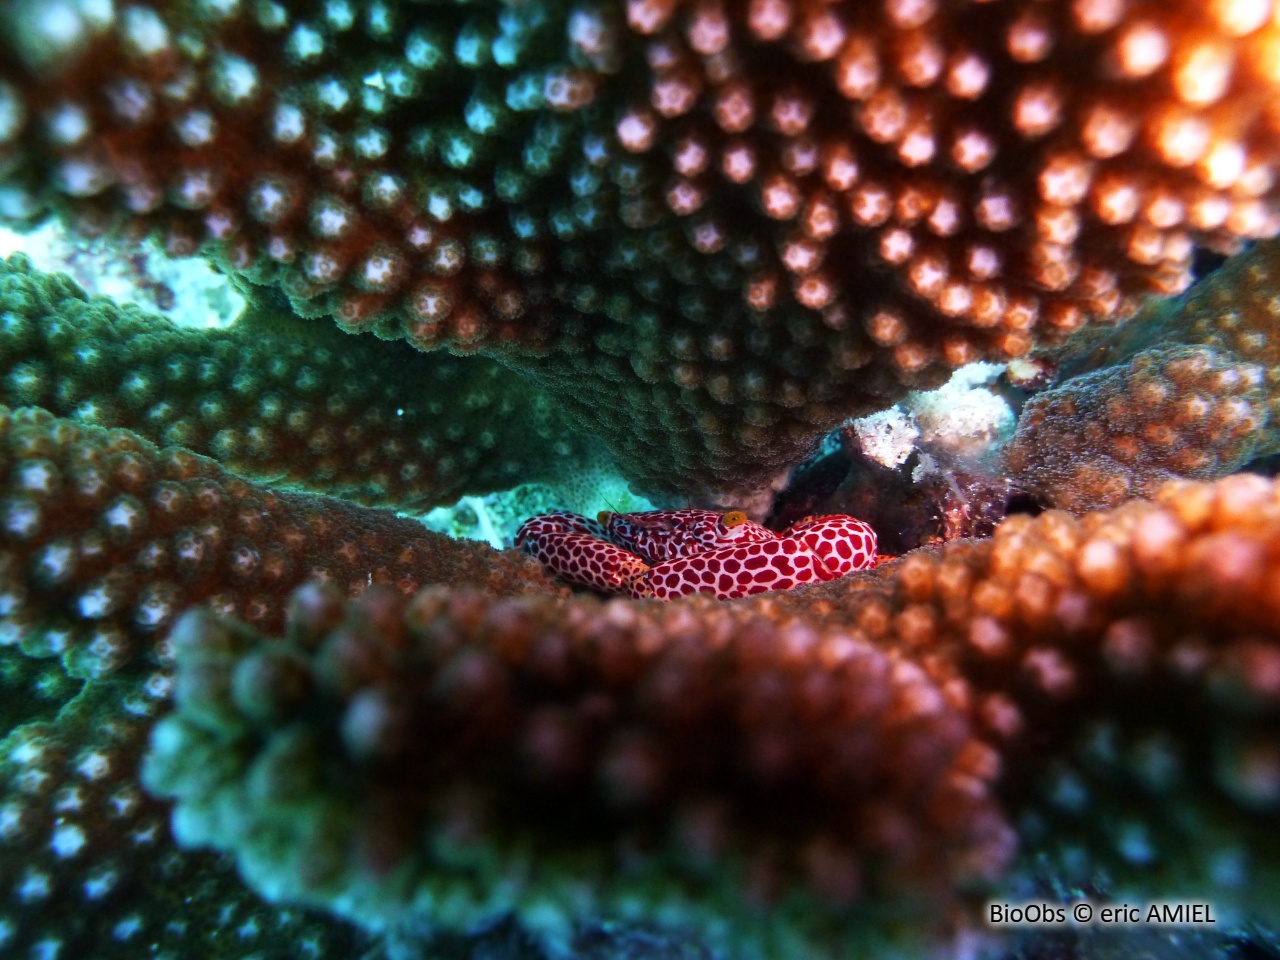 Crabe corallicole à pois rouges - Trapezia rufopunctata - eric AMIEL - BioObs